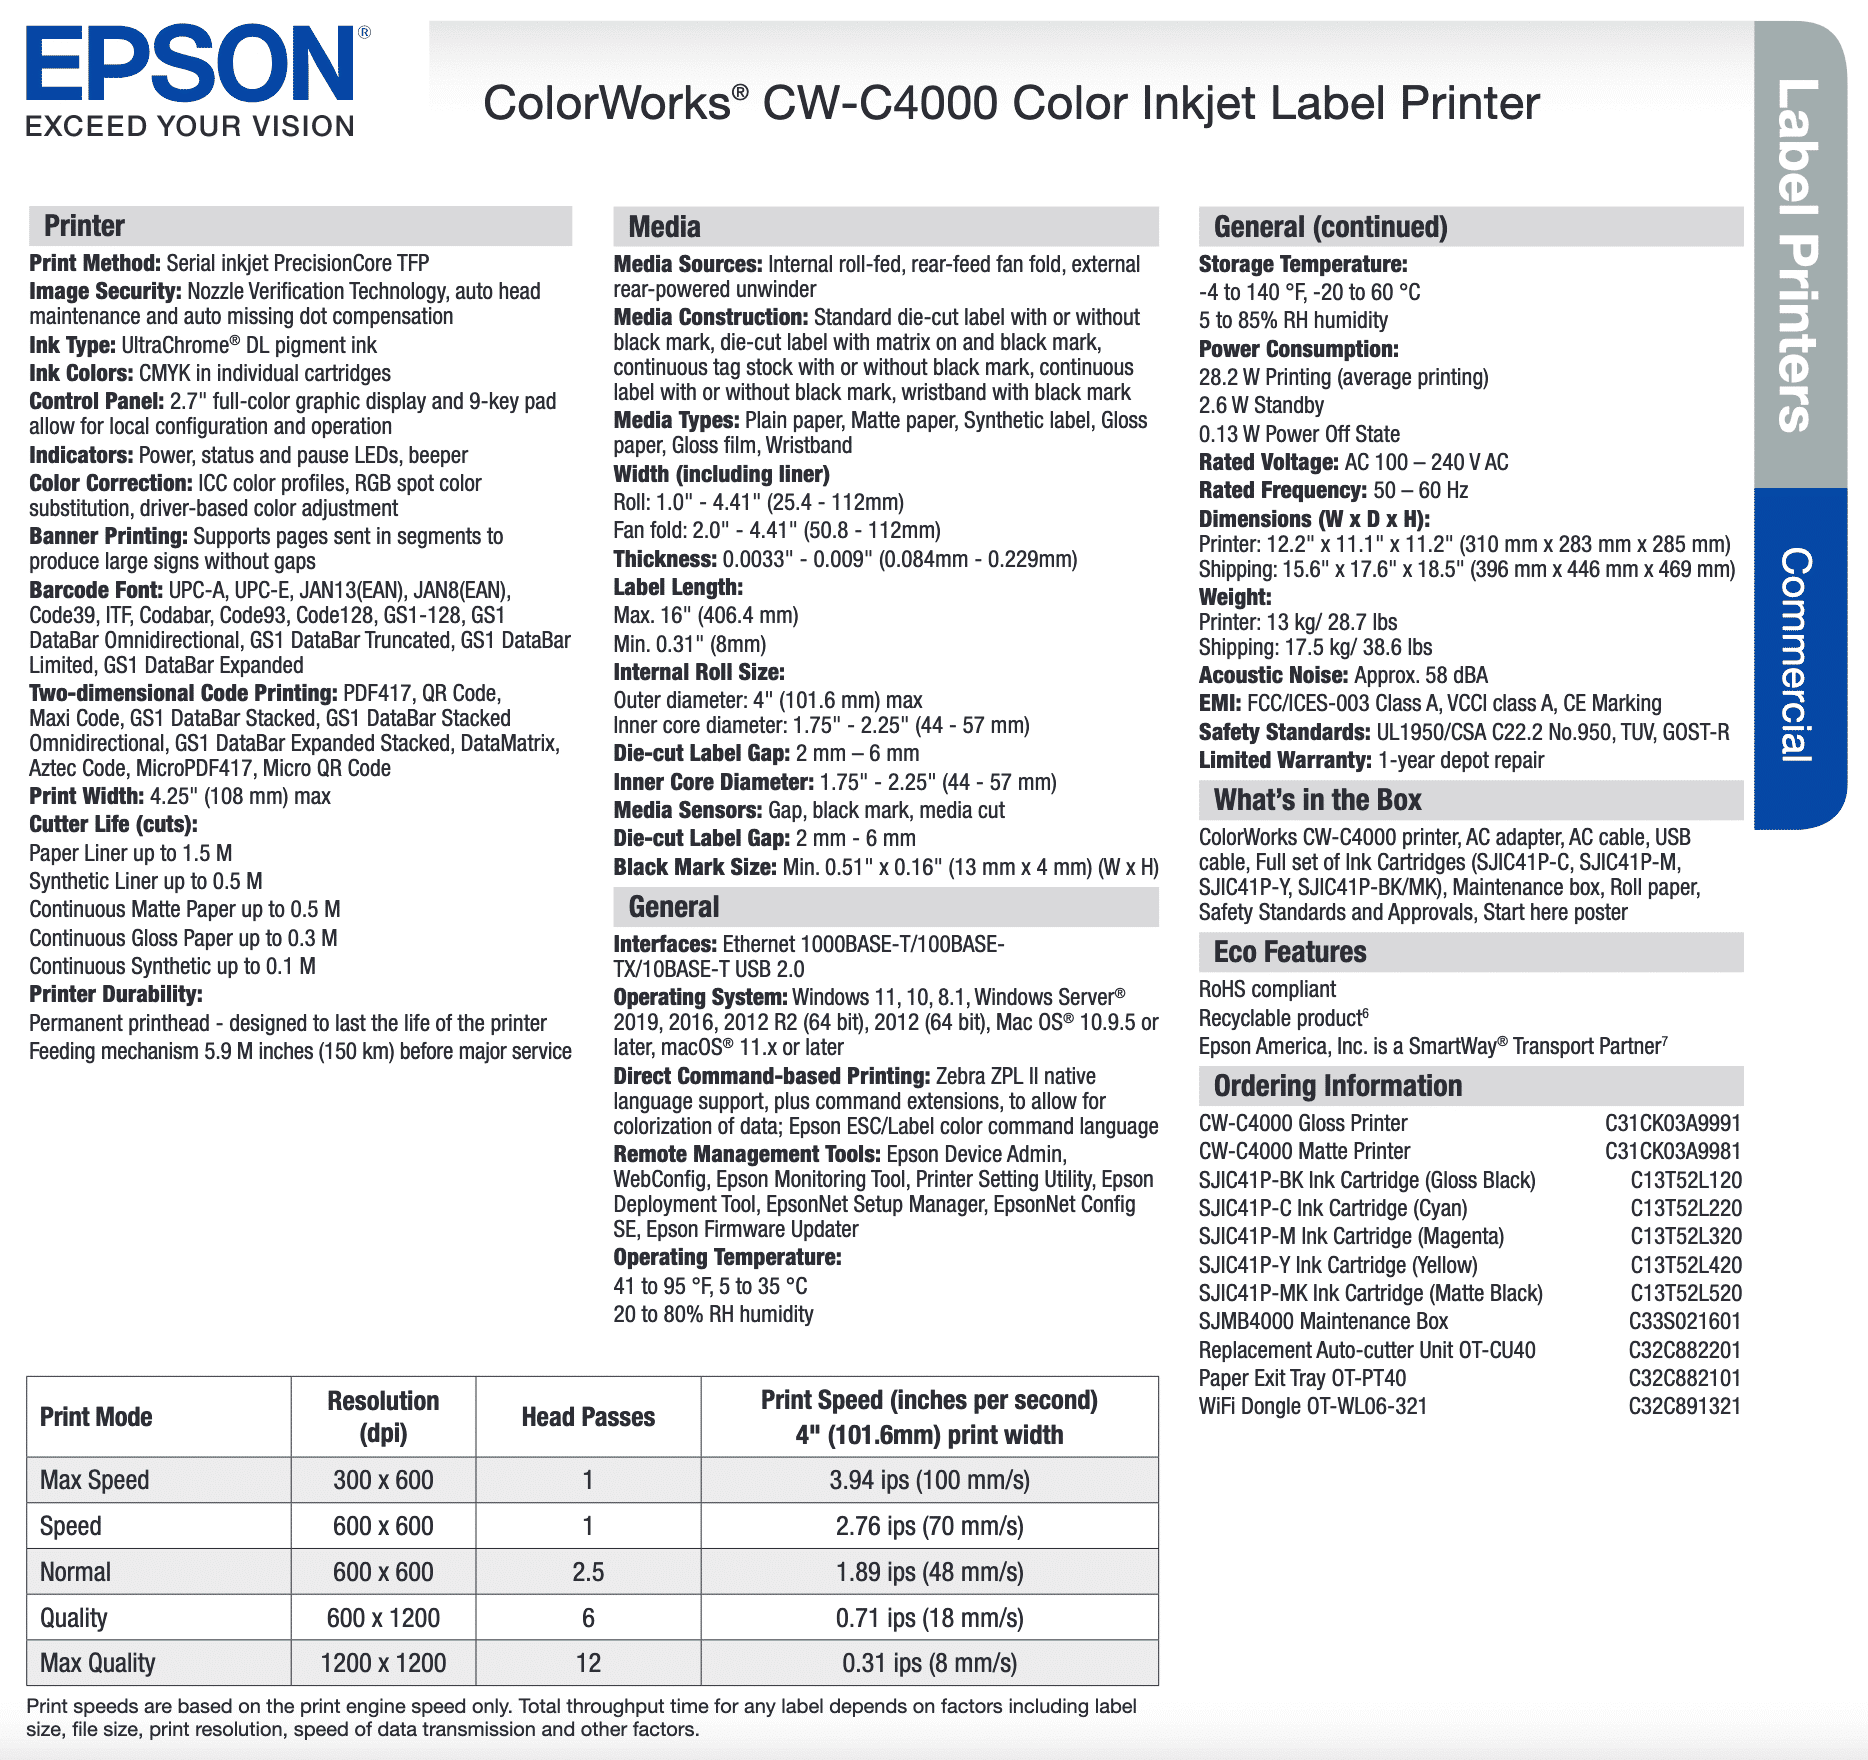 Epson C4000 Specifications